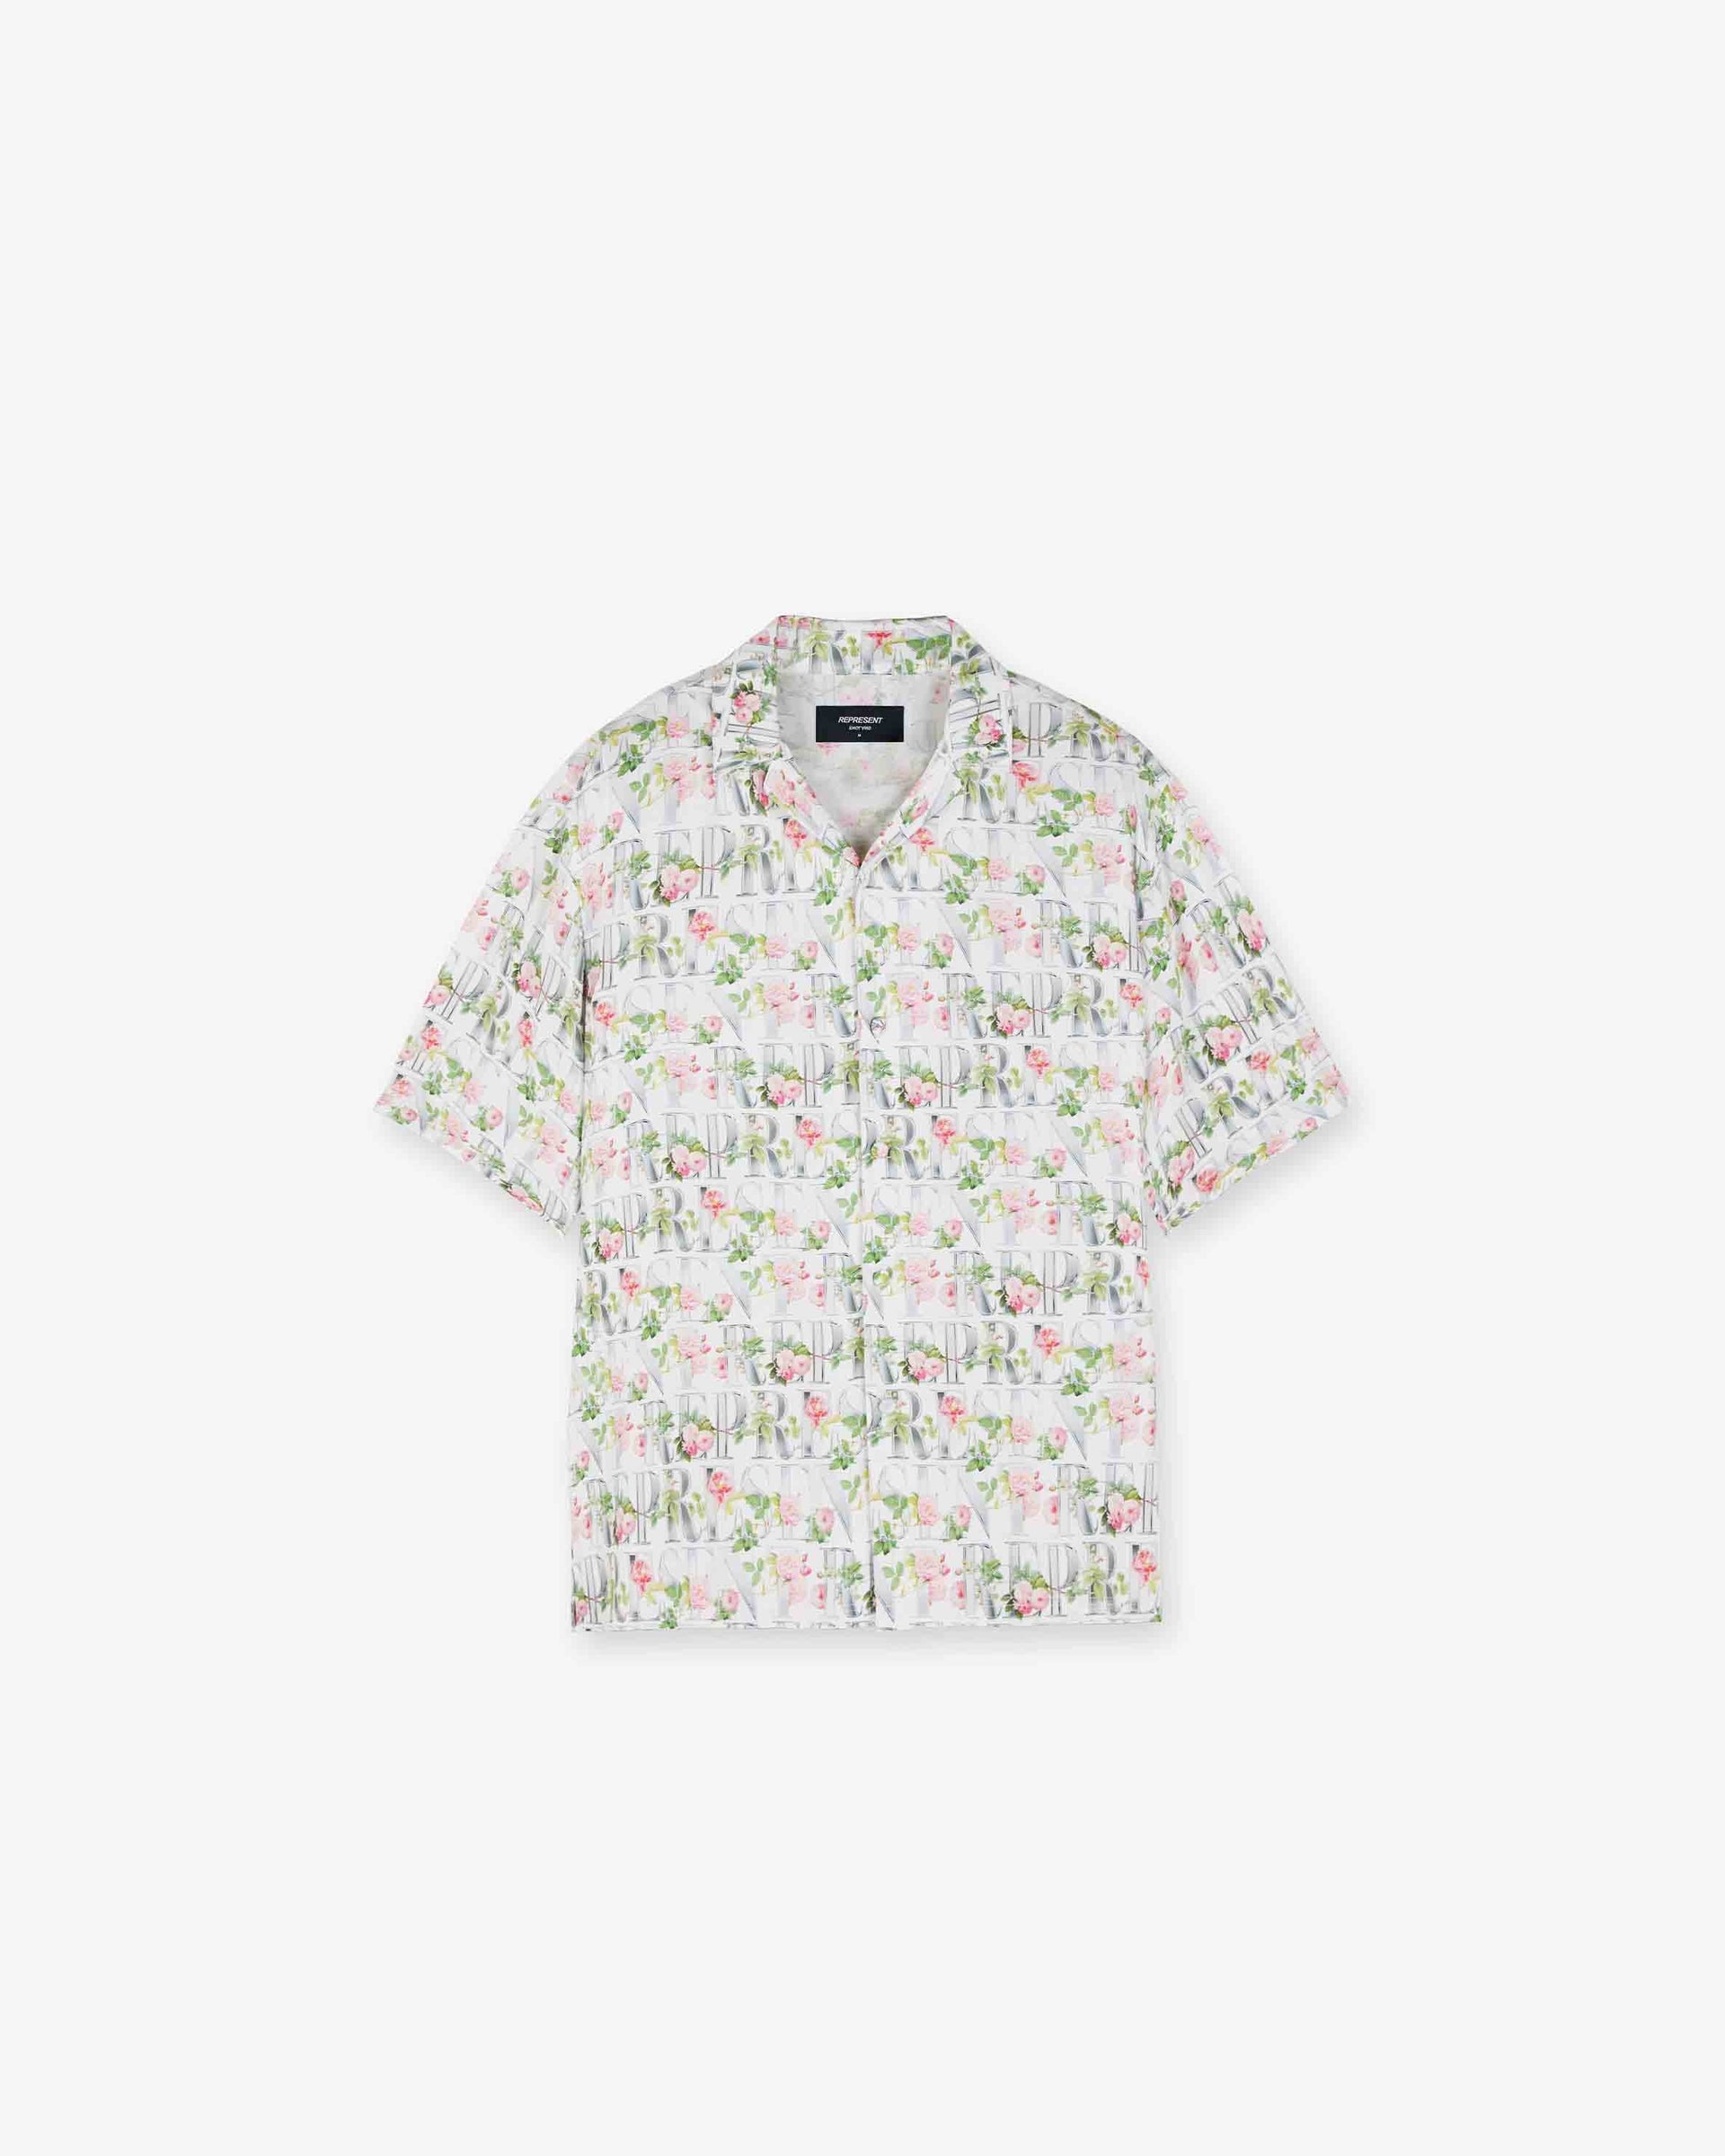 Floral Represent Shirt | Flat White Shirts SC23 | Represent Clo